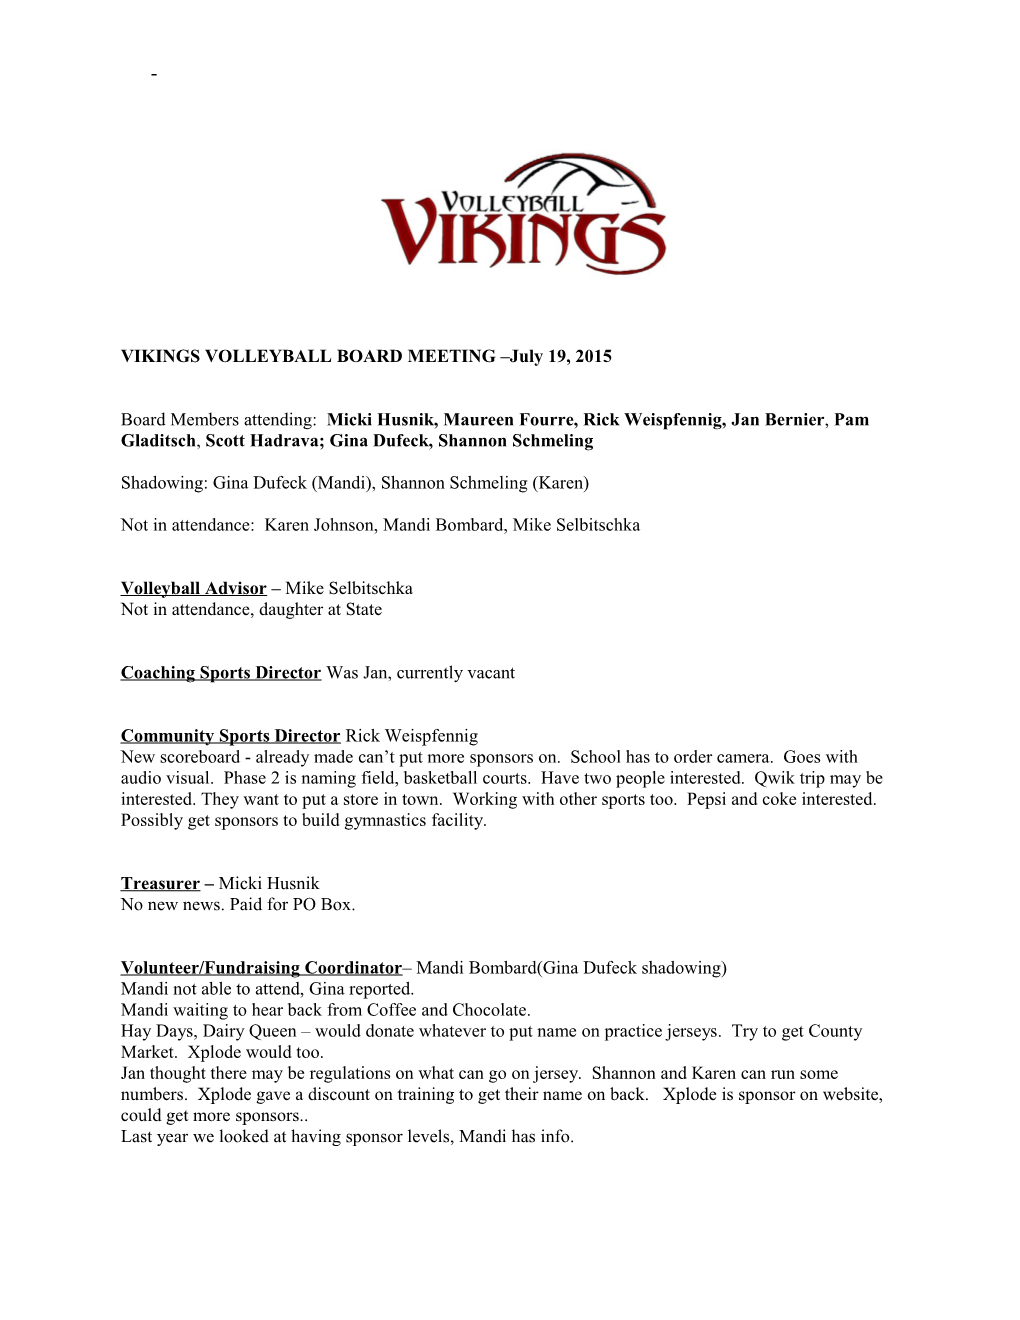 VIKINGS VOLLEYBALL BOARD MEETING July 19, 2015